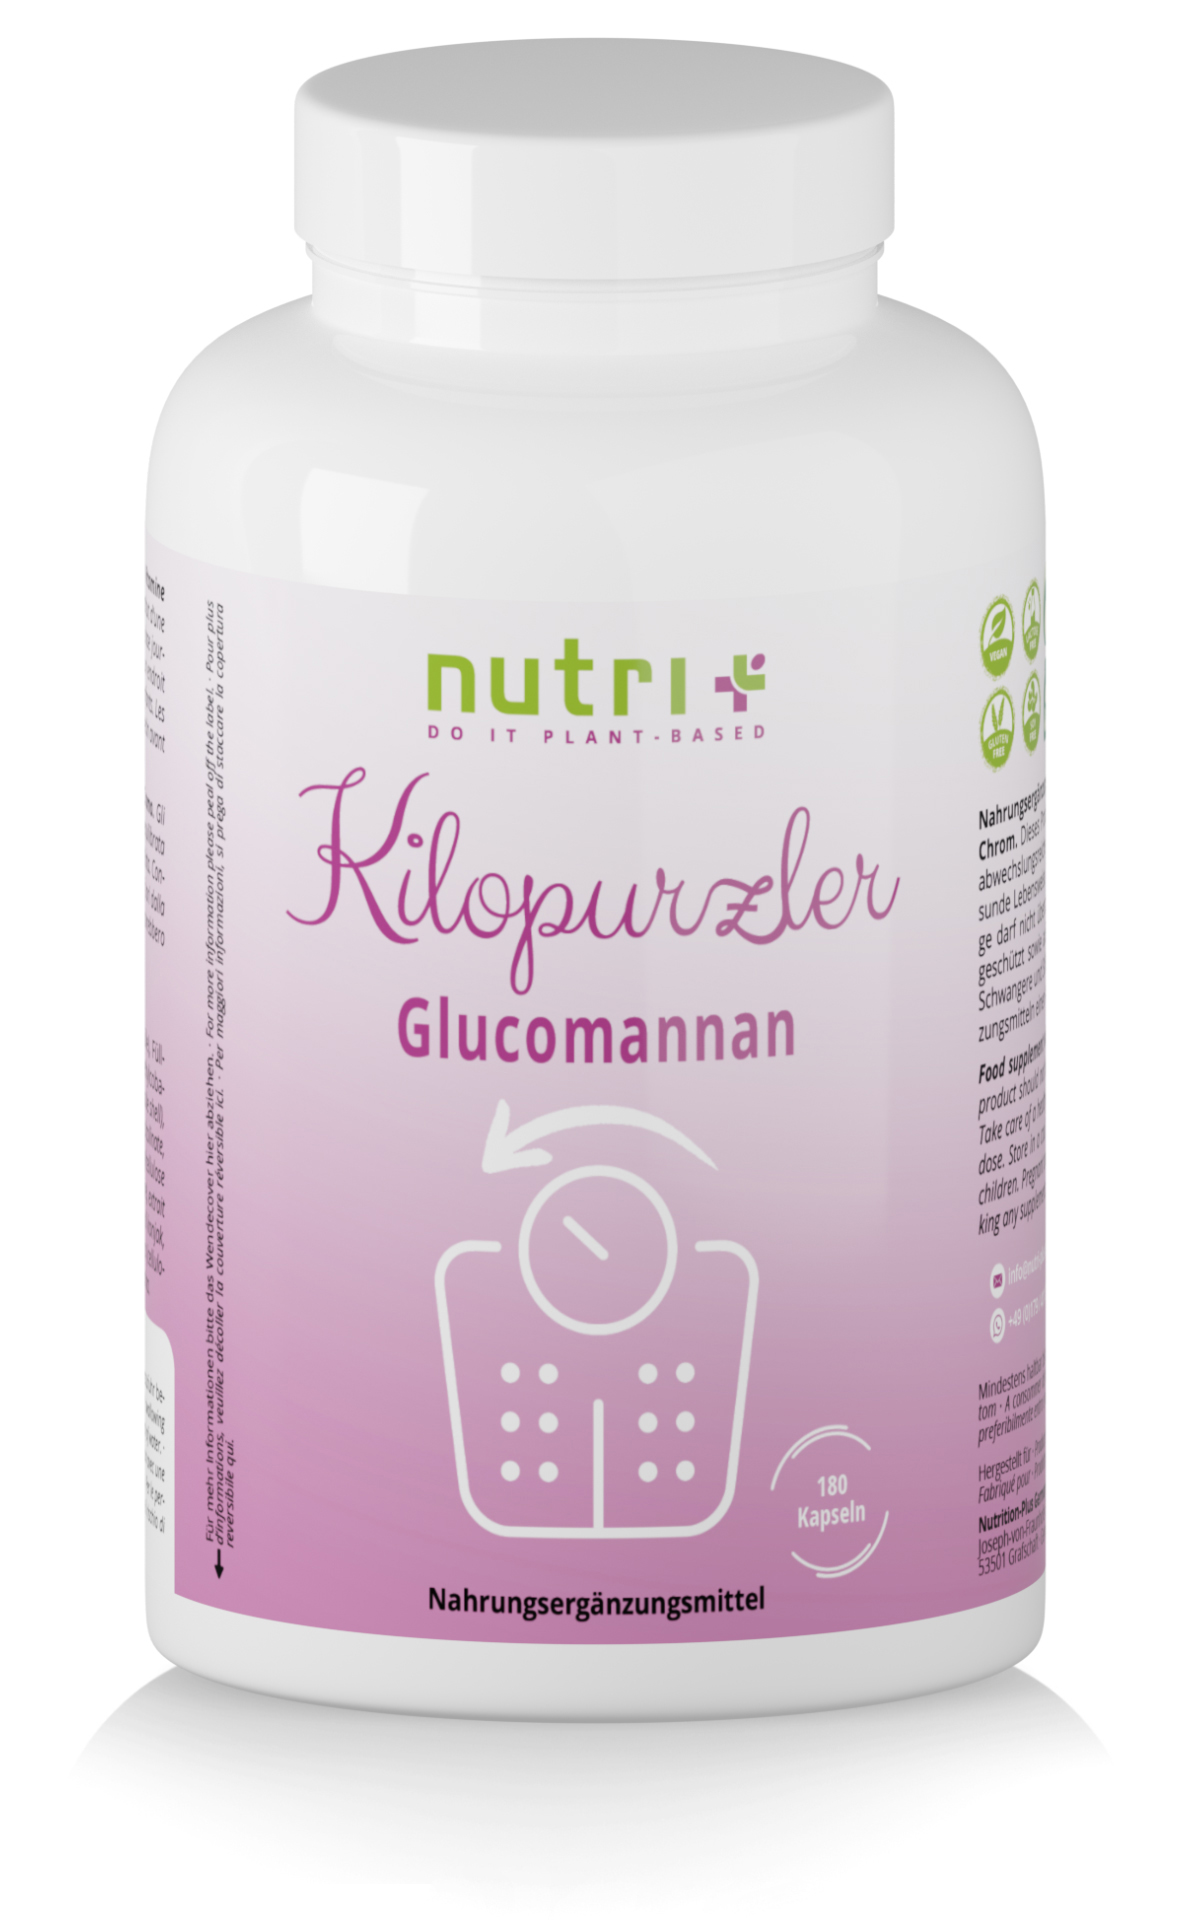 nutri+ Kilopurzler | 180 Kapseln | Appetitzügler & Gewichtsabnahme Unterstützung mit Glucomannan